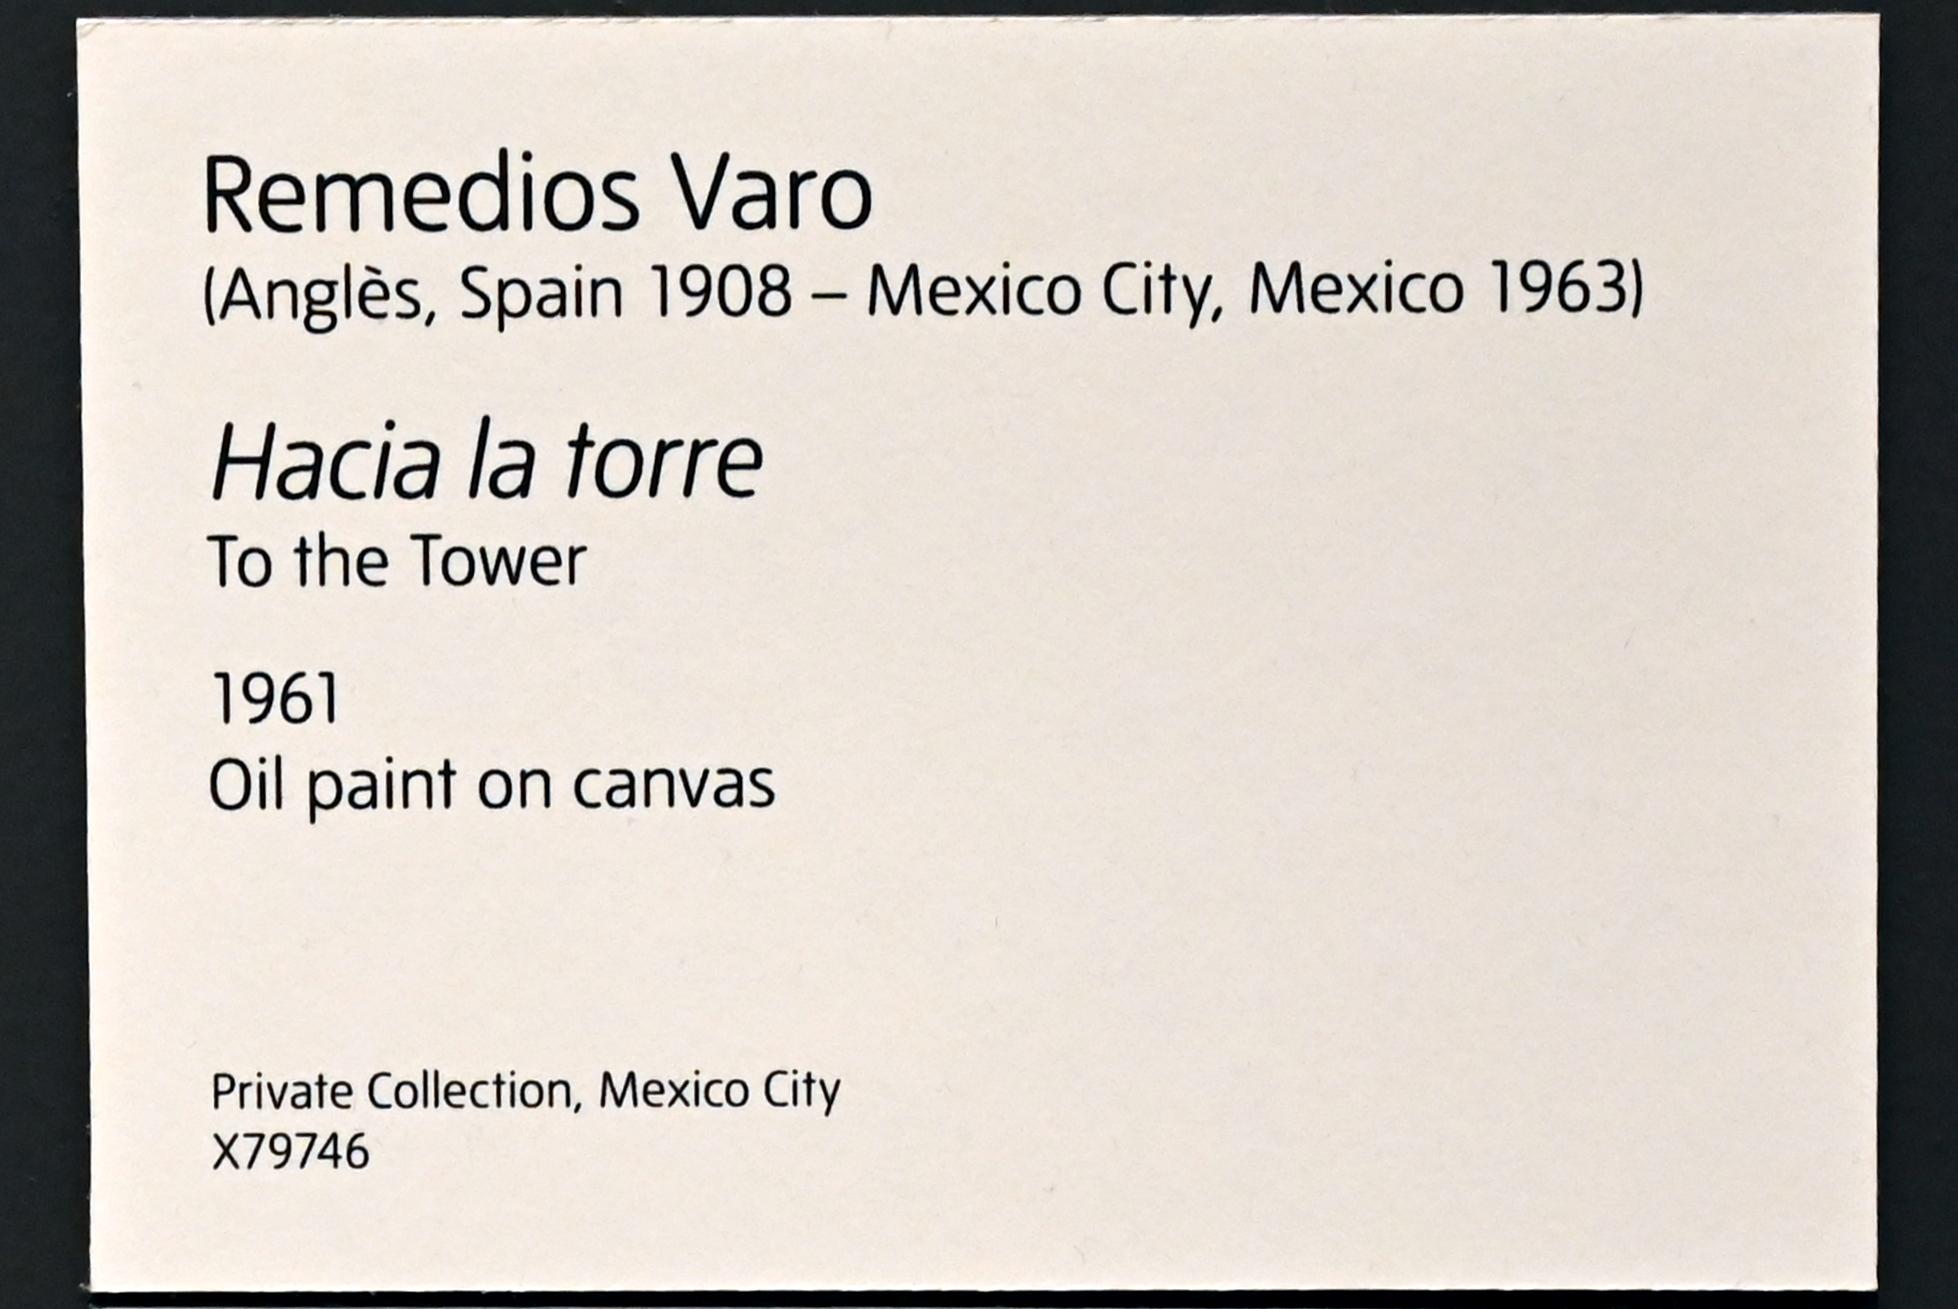 Remedios Varo (1956–1961), Richtung Turm, London, Tate Modern, Ausstellung "Surrealism Beyond Borders" vom 24.02.-29.08.2022, Saal 10, 1961, Bild 2/3